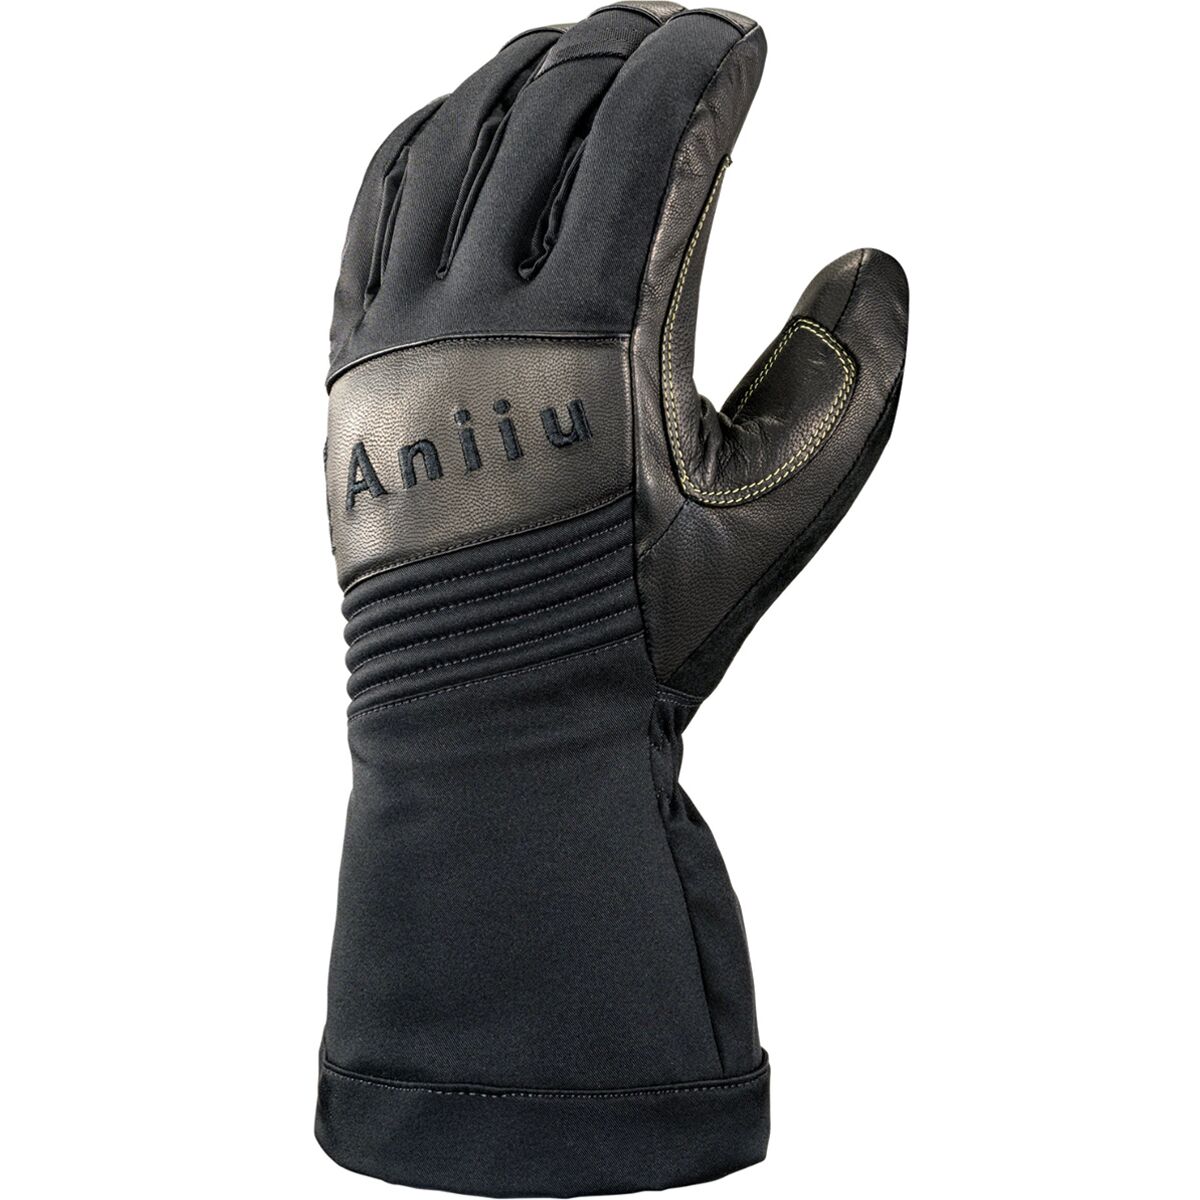 Aniiu Viinson Glove - Men's Tuxedo Black